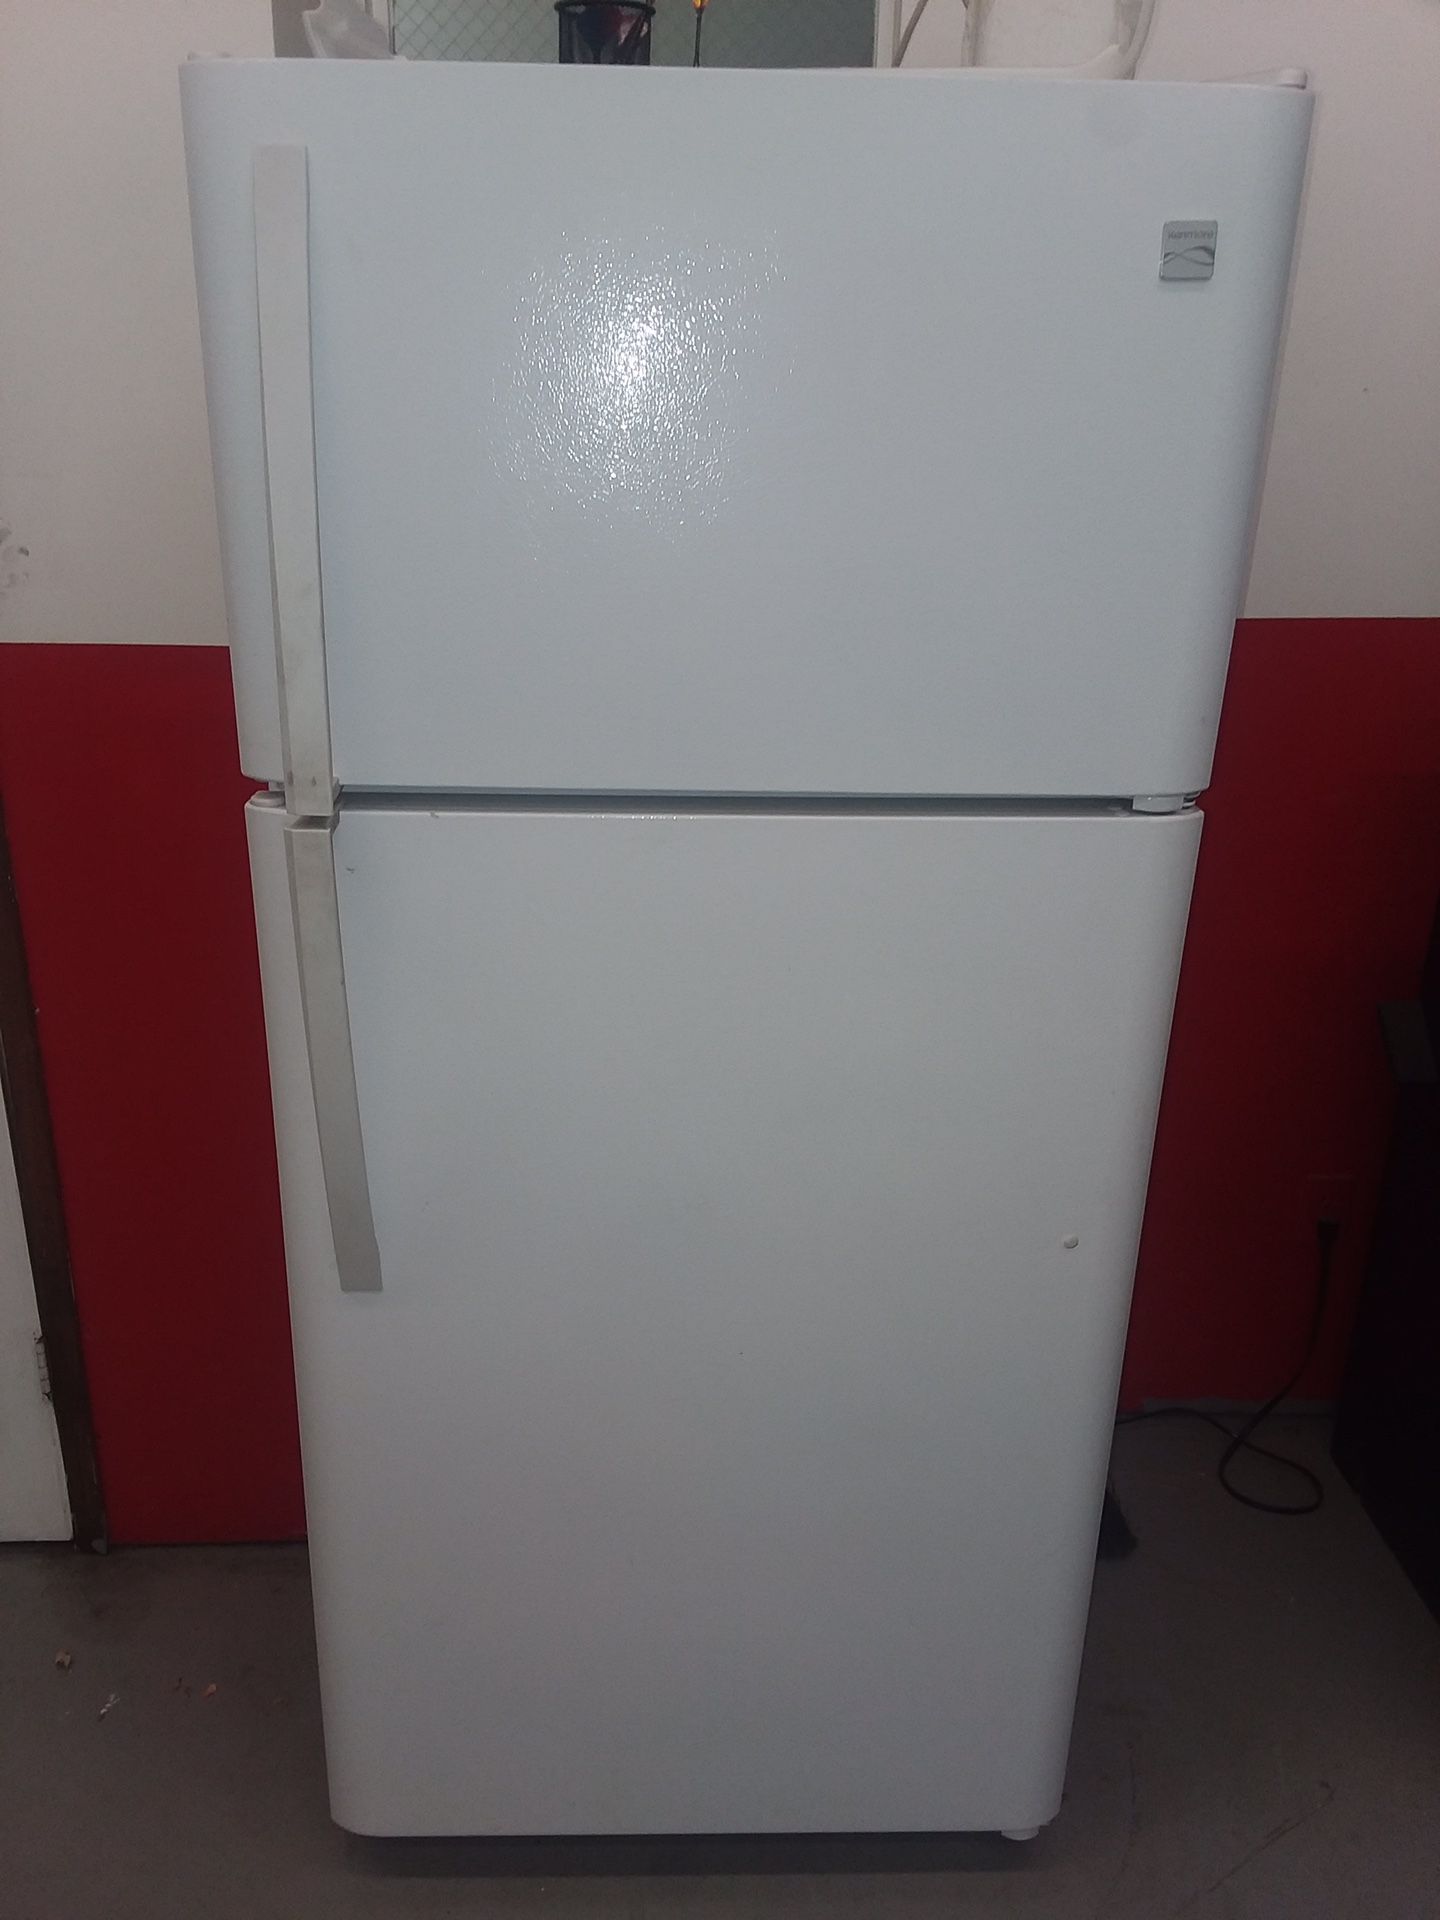 Sears refrigerator